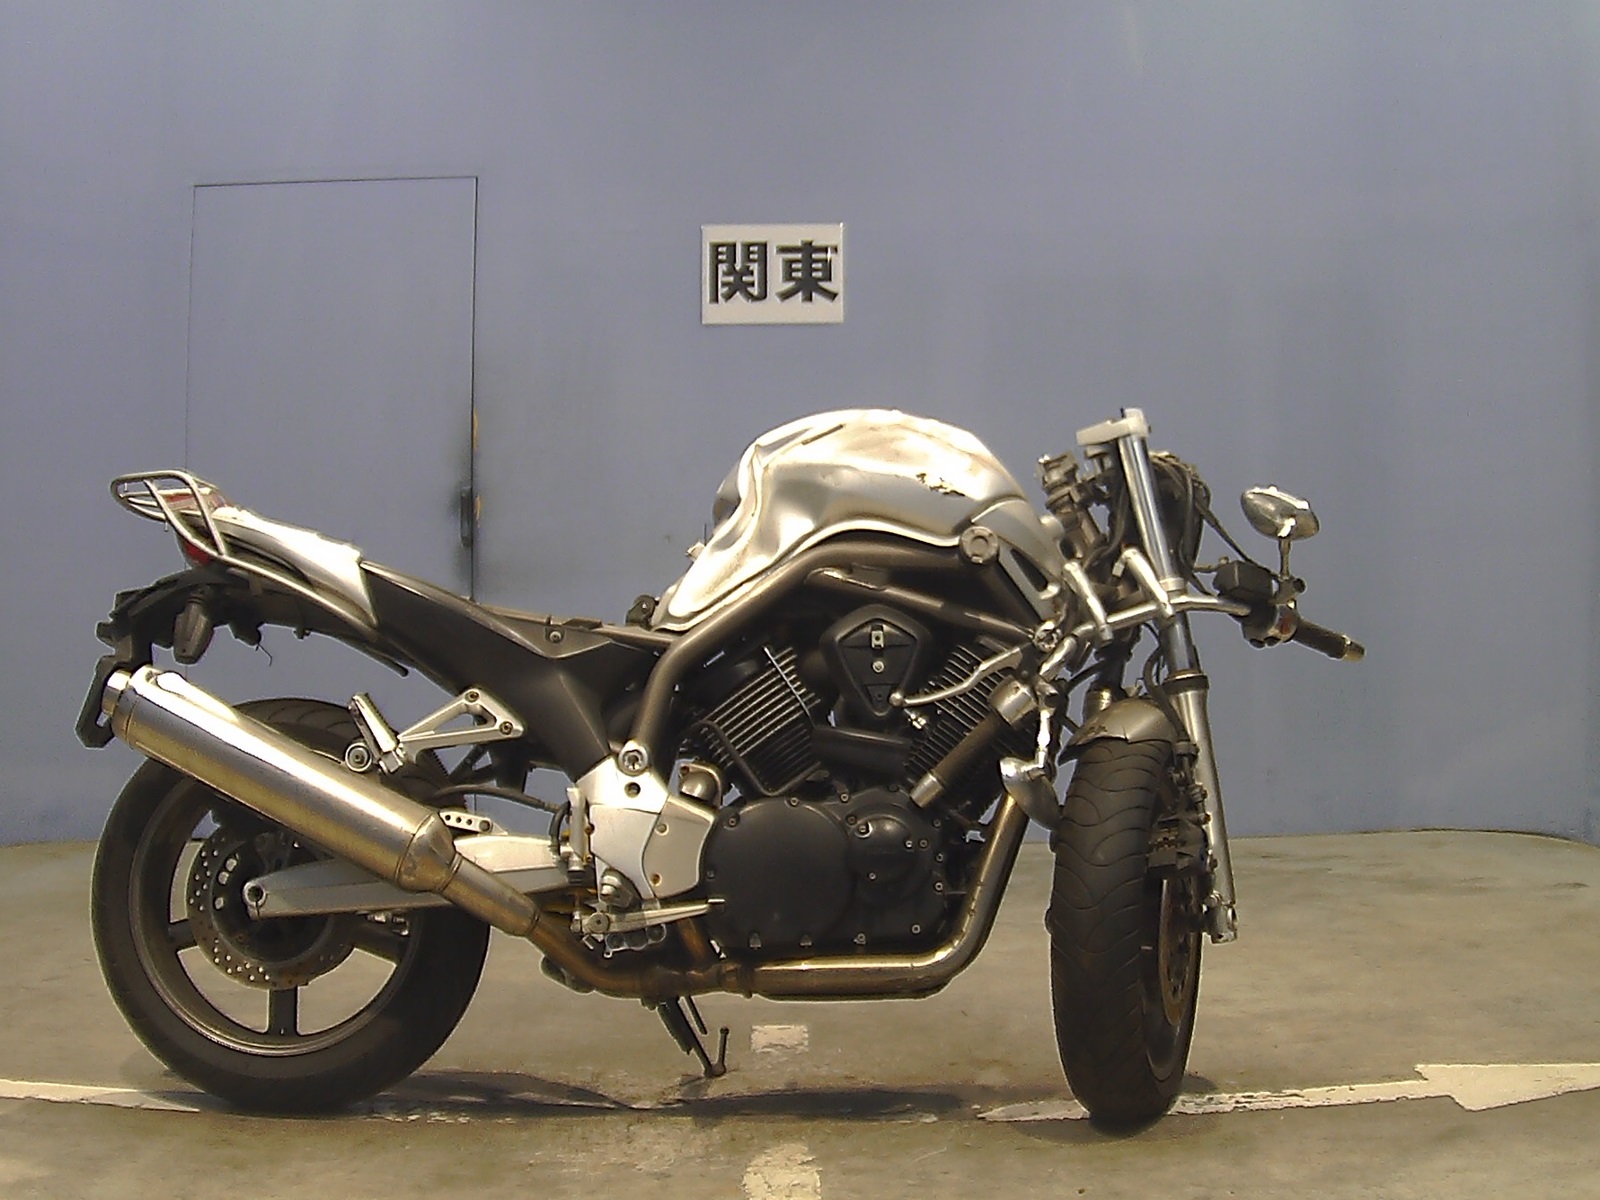 Мотоцикл ямаха bt 1100 bulldog - гибрид нейкеда и круизера | ⚡chtocar